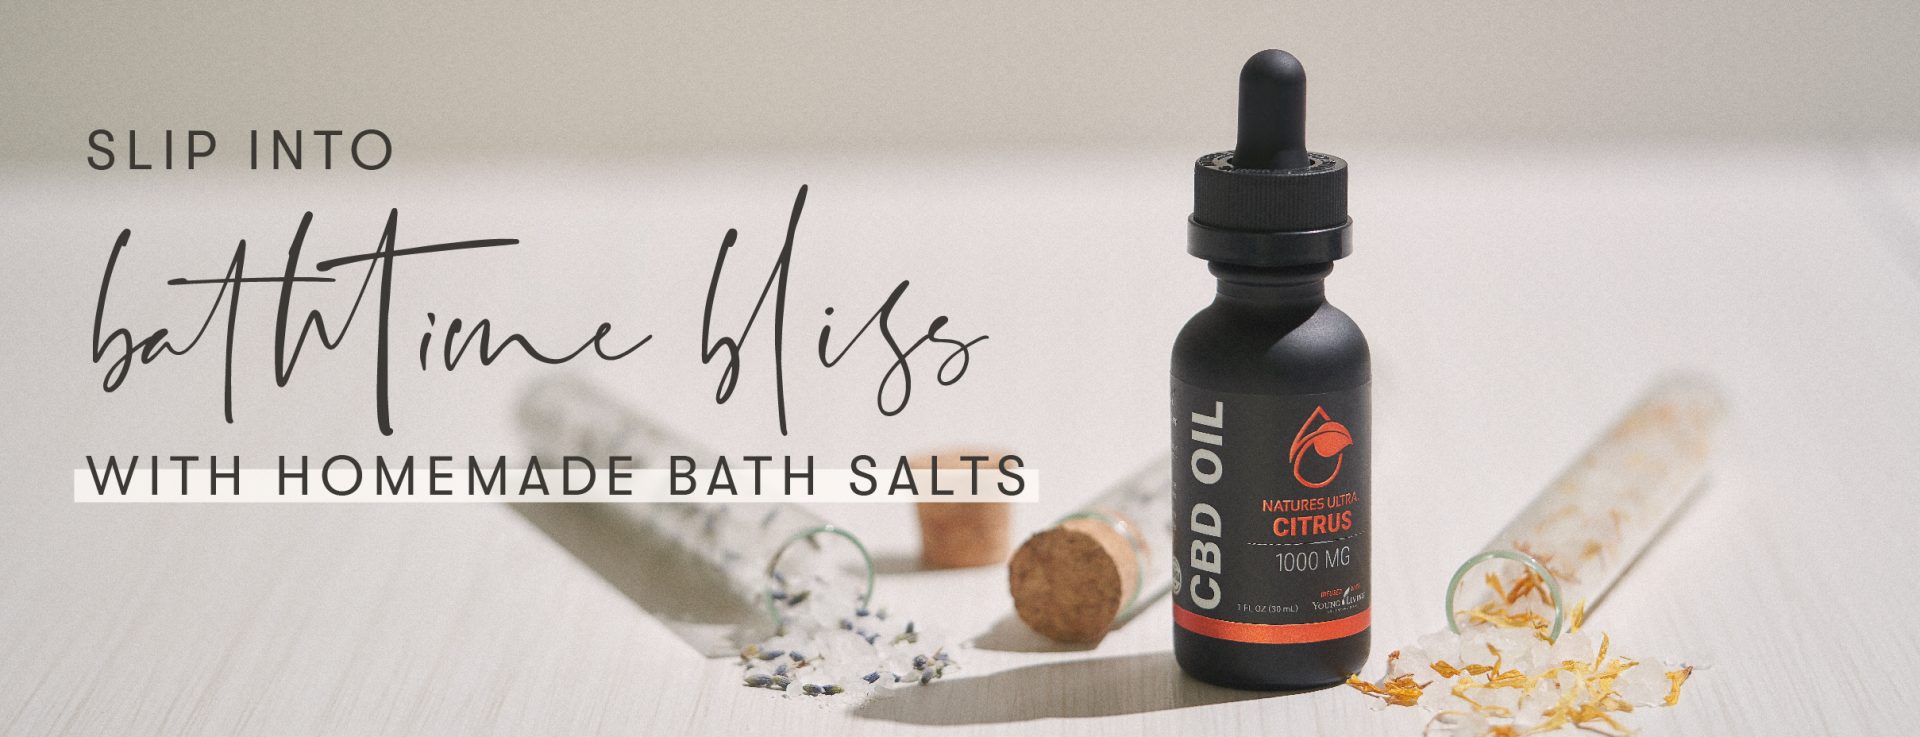 Slip-into-bathtime-bliss-with-homemade-bath-salts